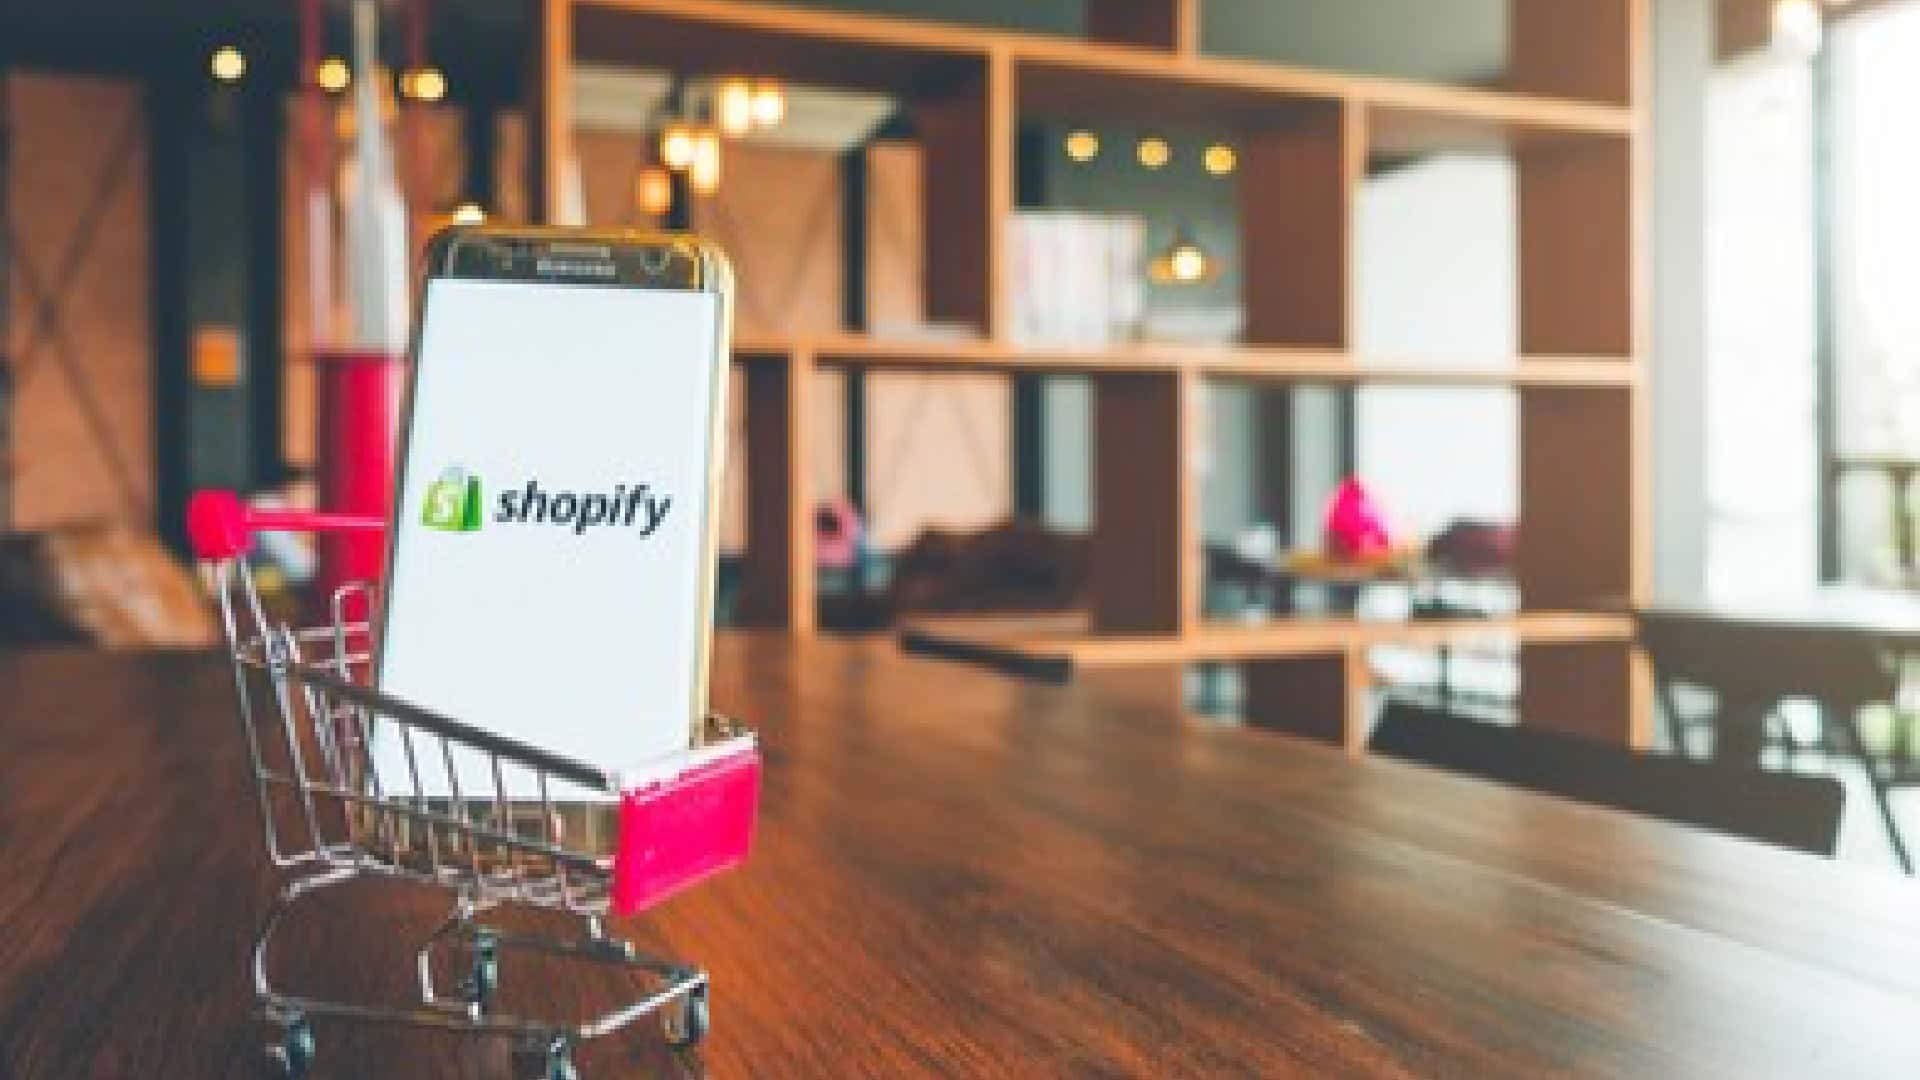 , Shopify در حال آزمایش یک ویژگی جدید جستجوی جهانی است, محتوا مارکتینگ